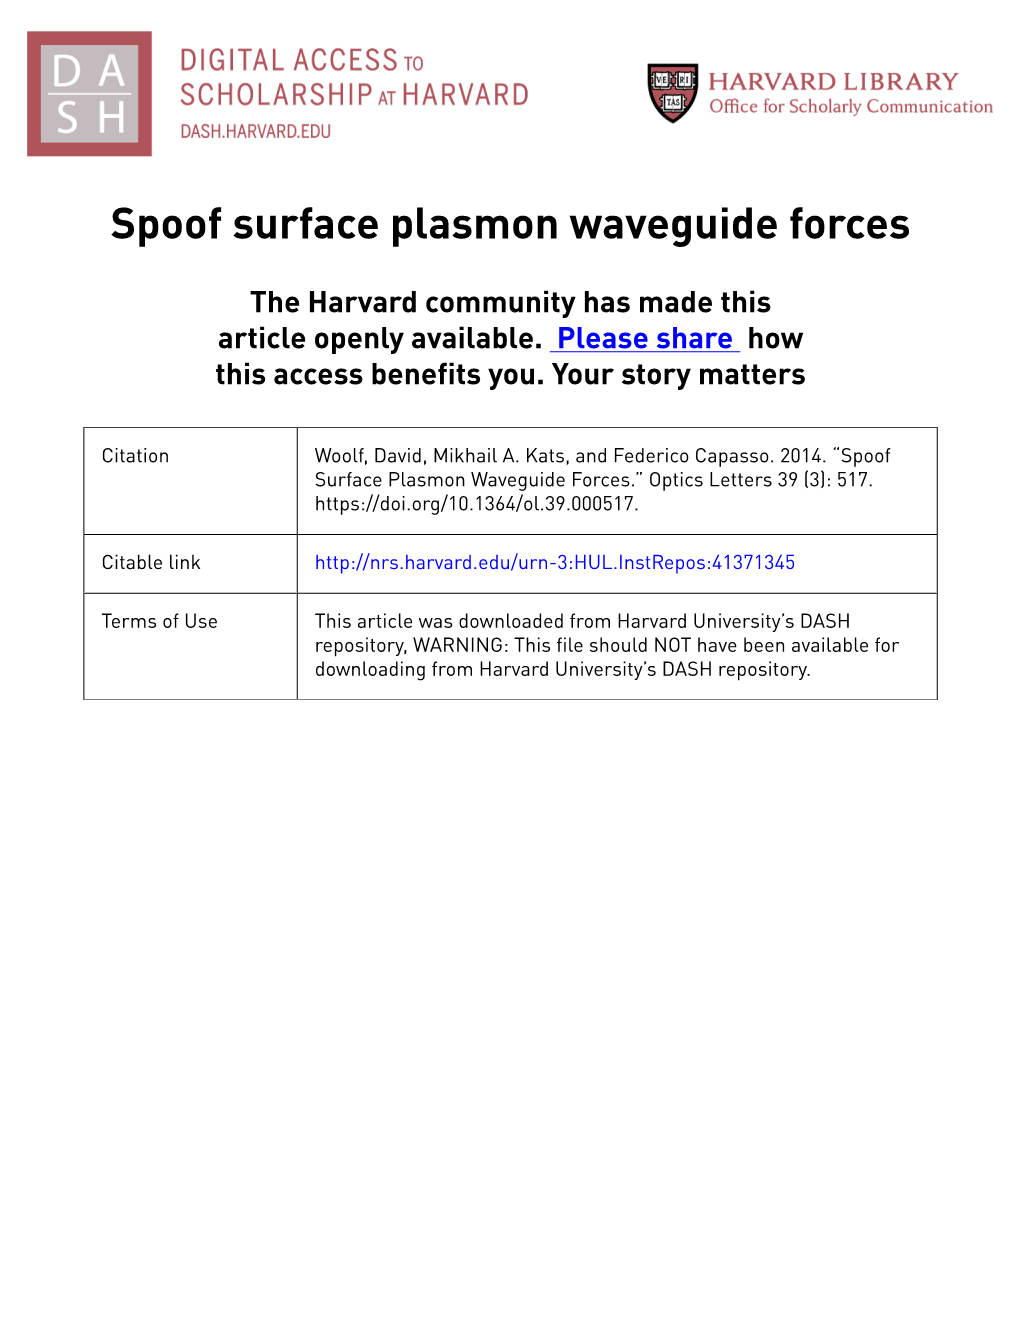 Spoof Surface Plasmon Waveguide Forces